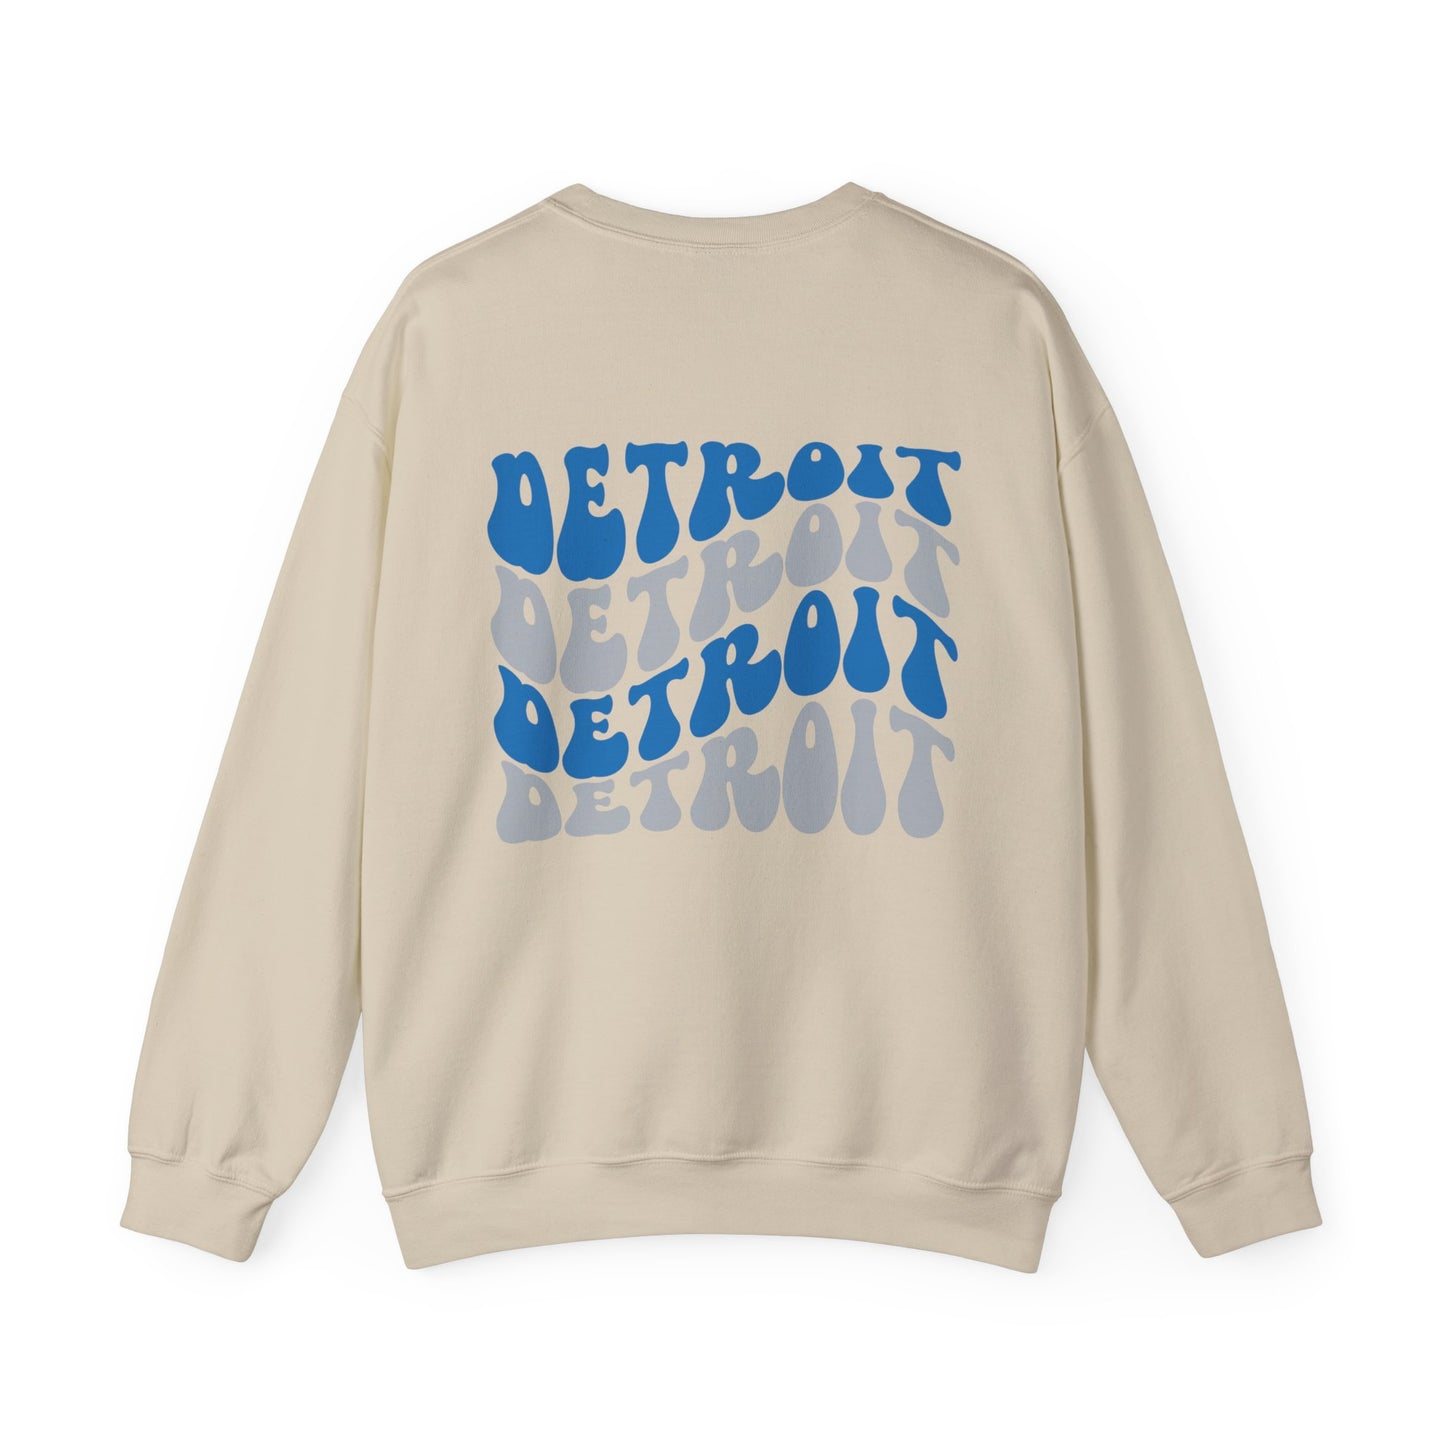 Retro Detroit Lions Crewneck Sweatshirt